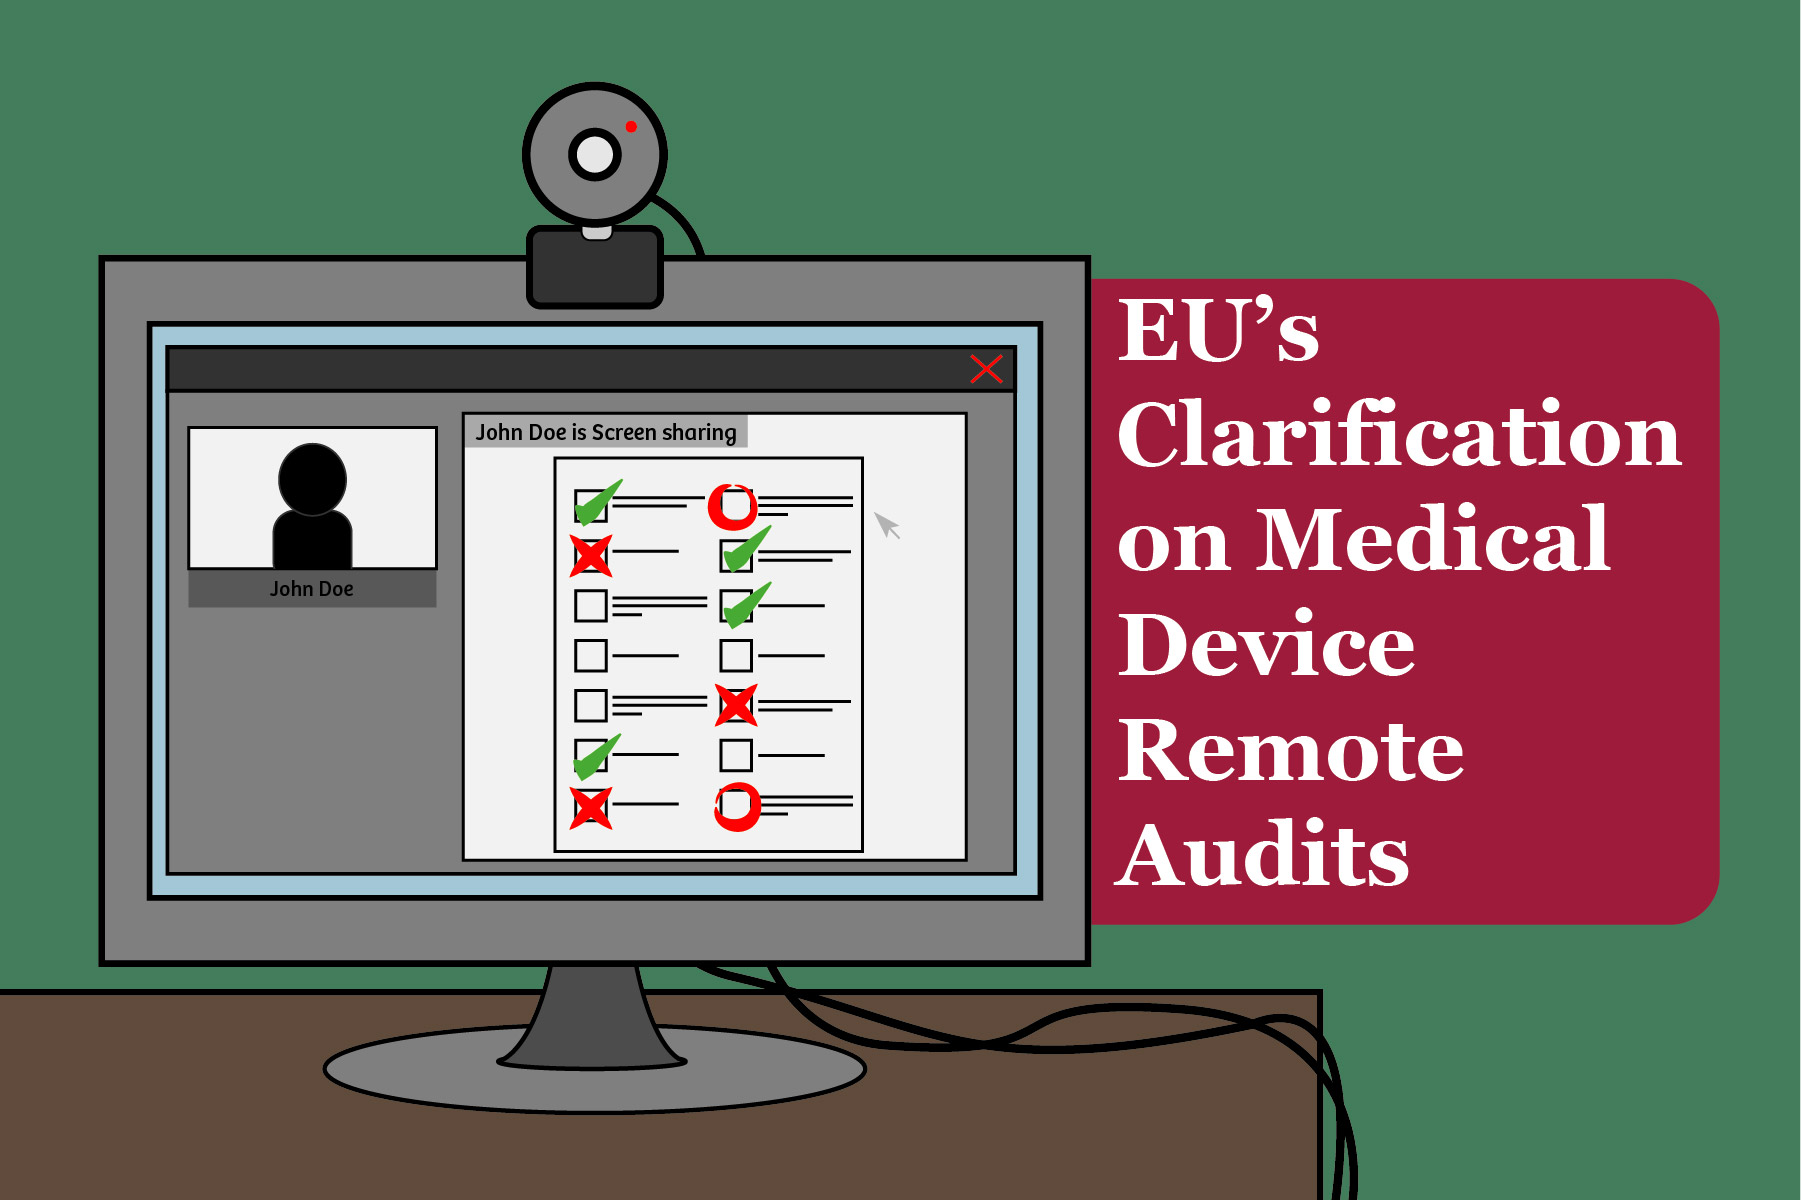 EU’s Clarification on Medical Device Remote Audits